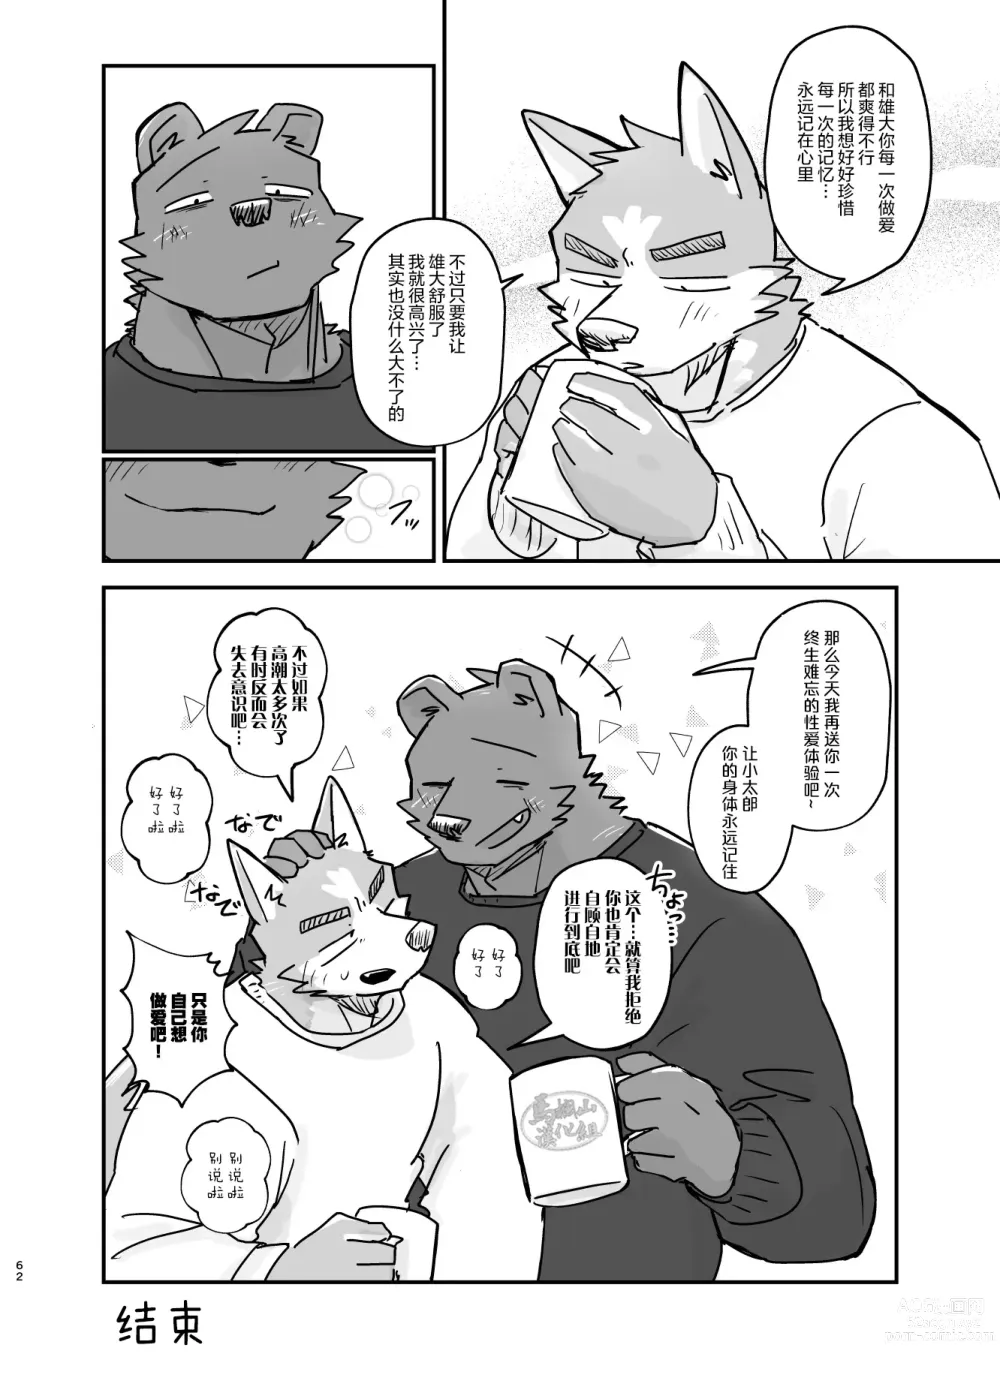 Page 61 of doujinshi 梦乡时分的情事